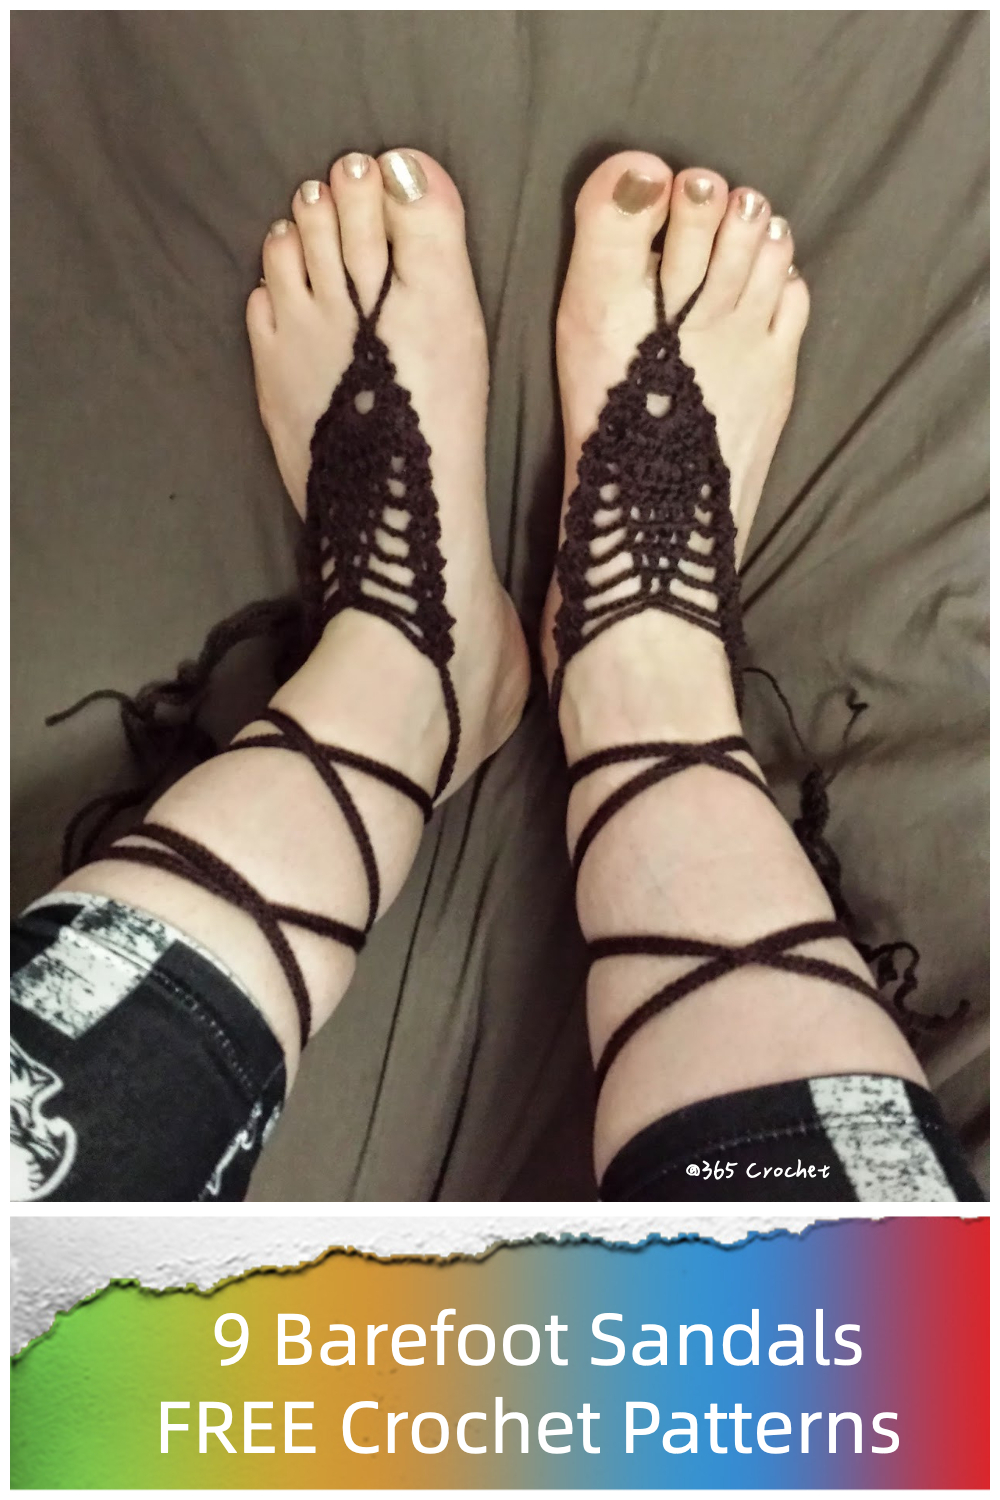 9 Barefoot Sandals FREE Crochet Patterns 